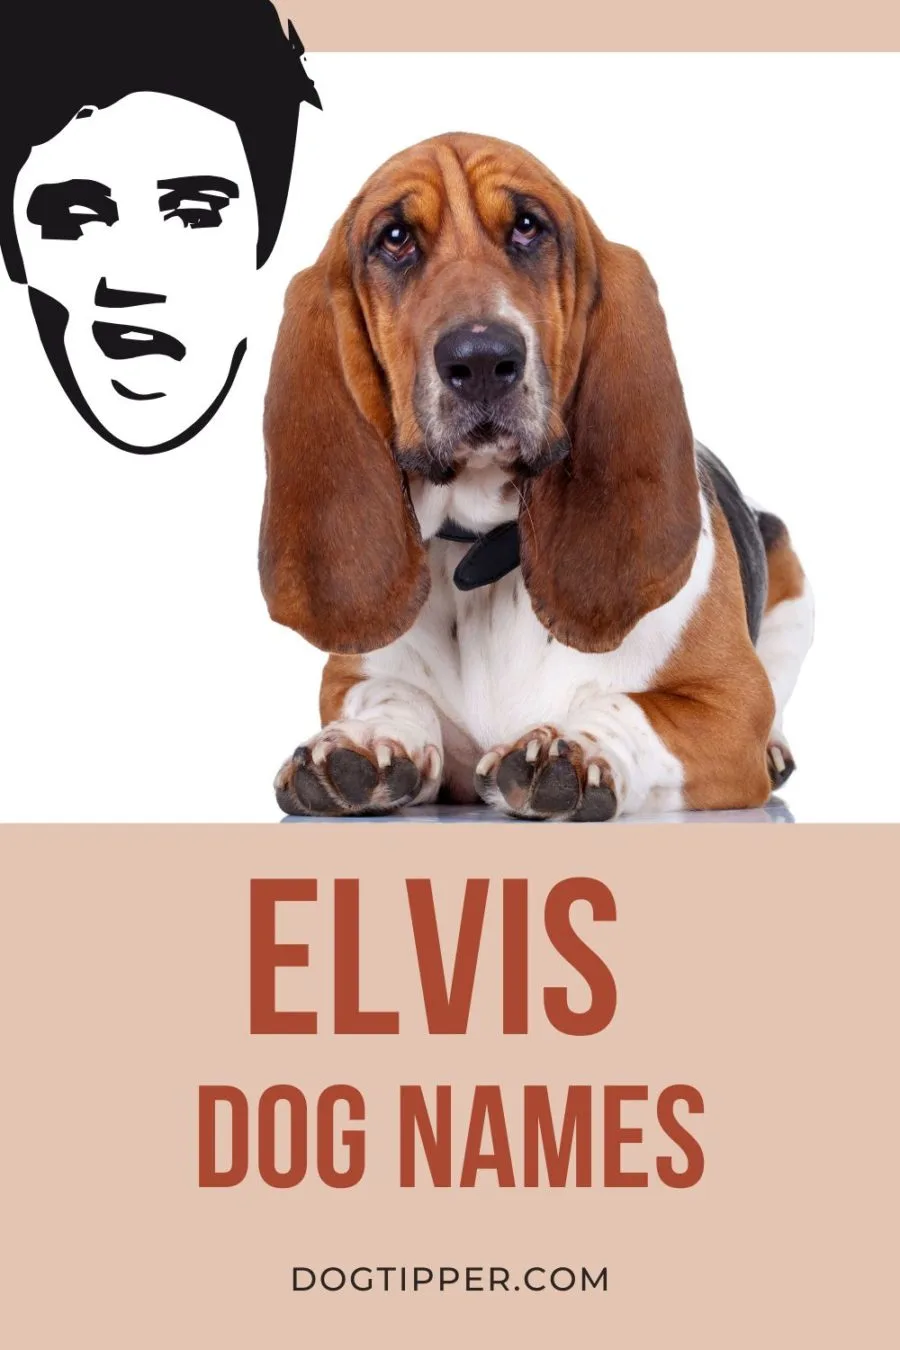 Elvis inspired dog names